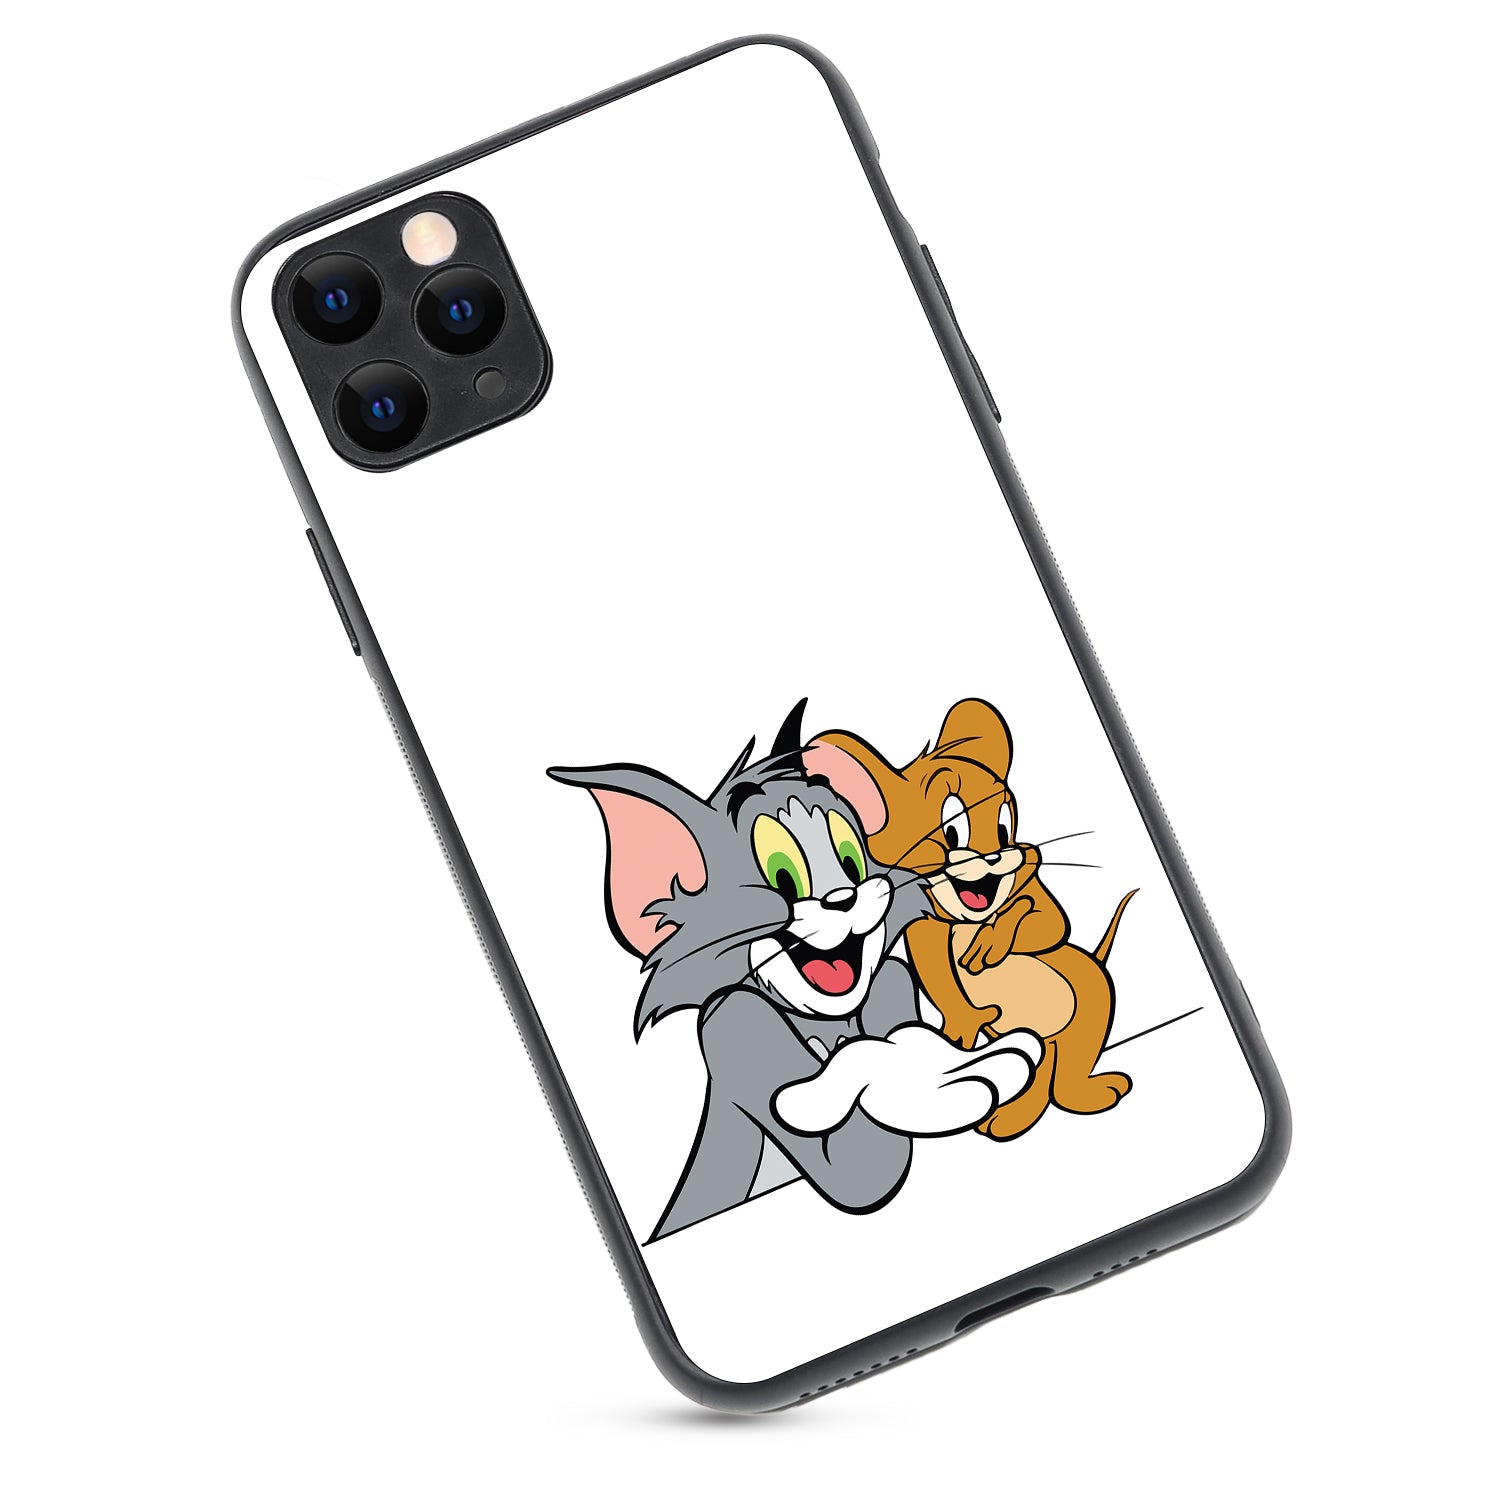 Tom &amp; Jerry Cartoon iPhone 11 Pro Max Case